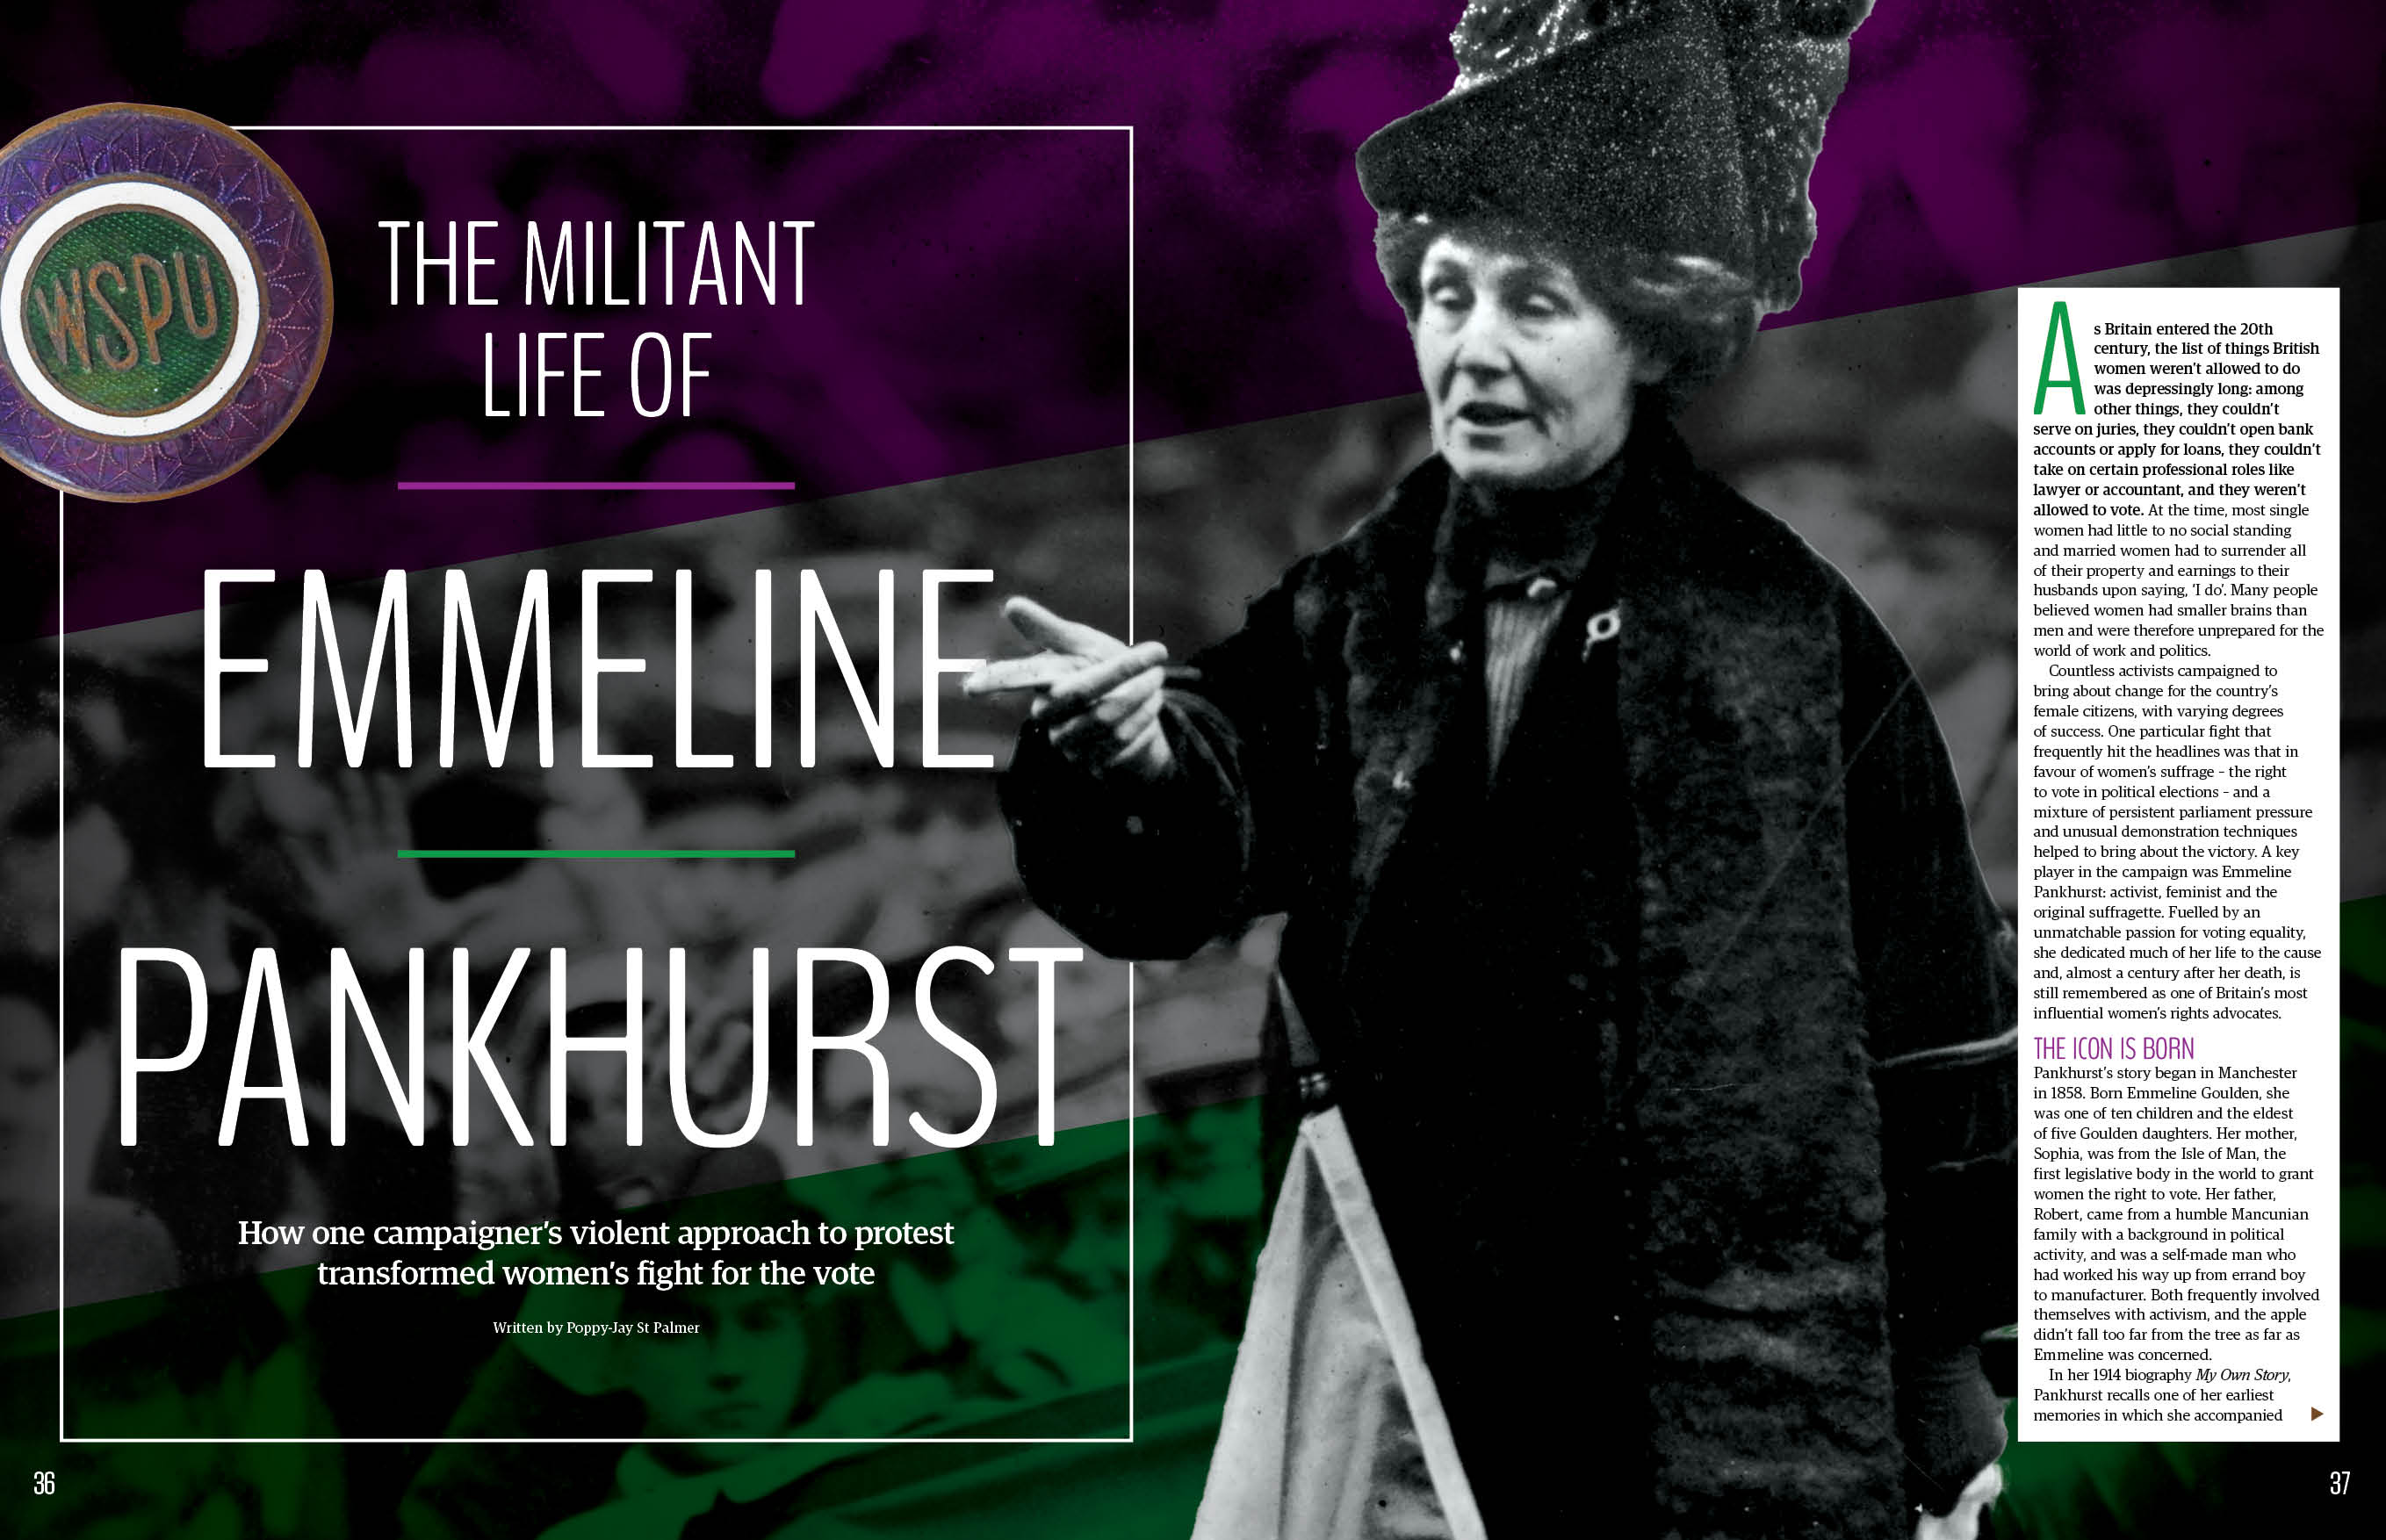 Emmeline Pankhurst, All About History 117